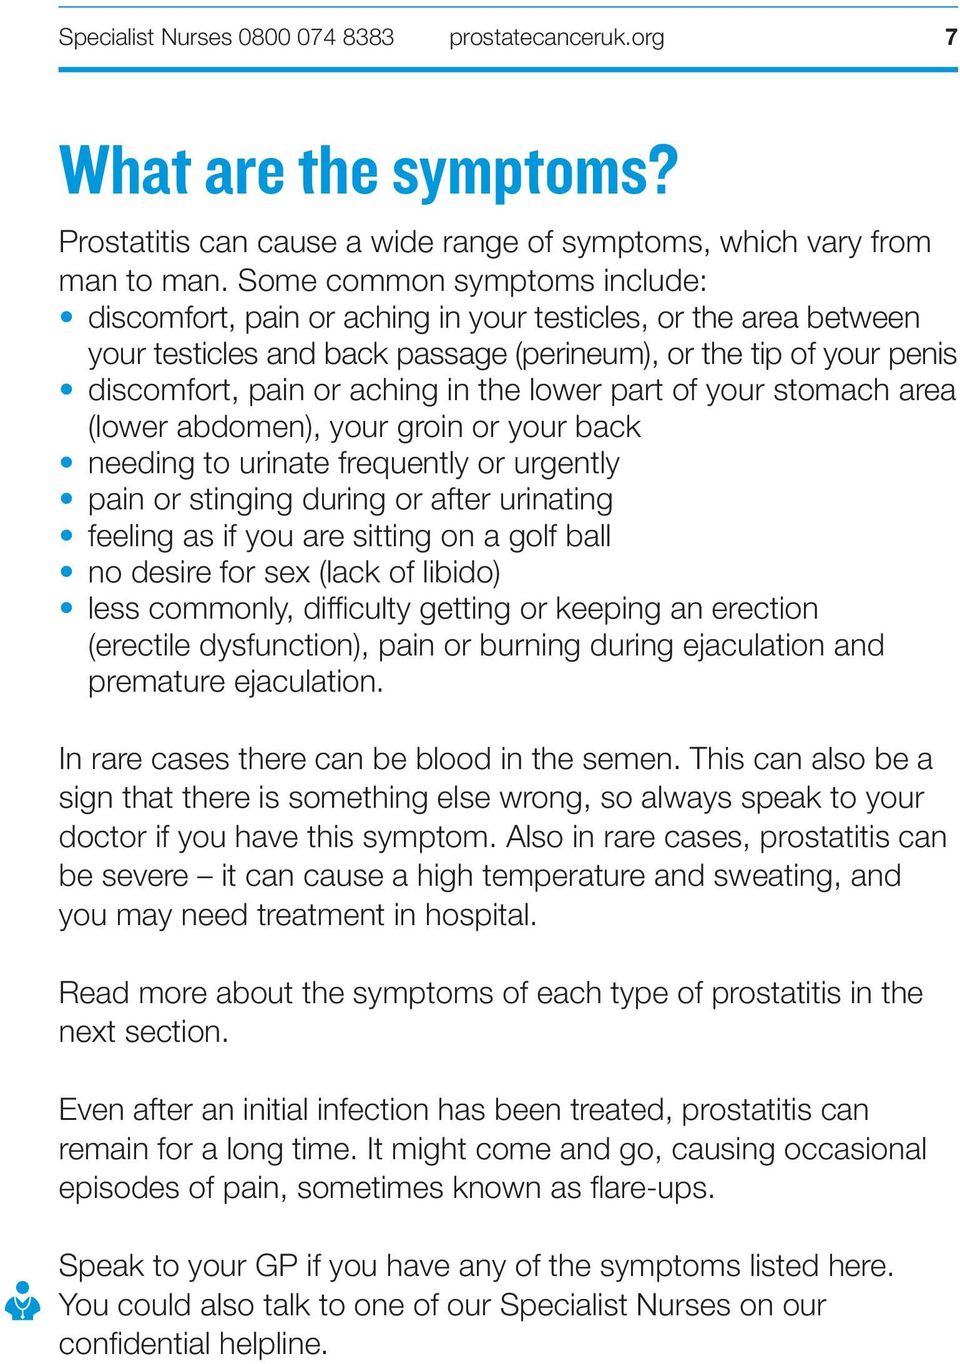 causes of prostatitis flare ups